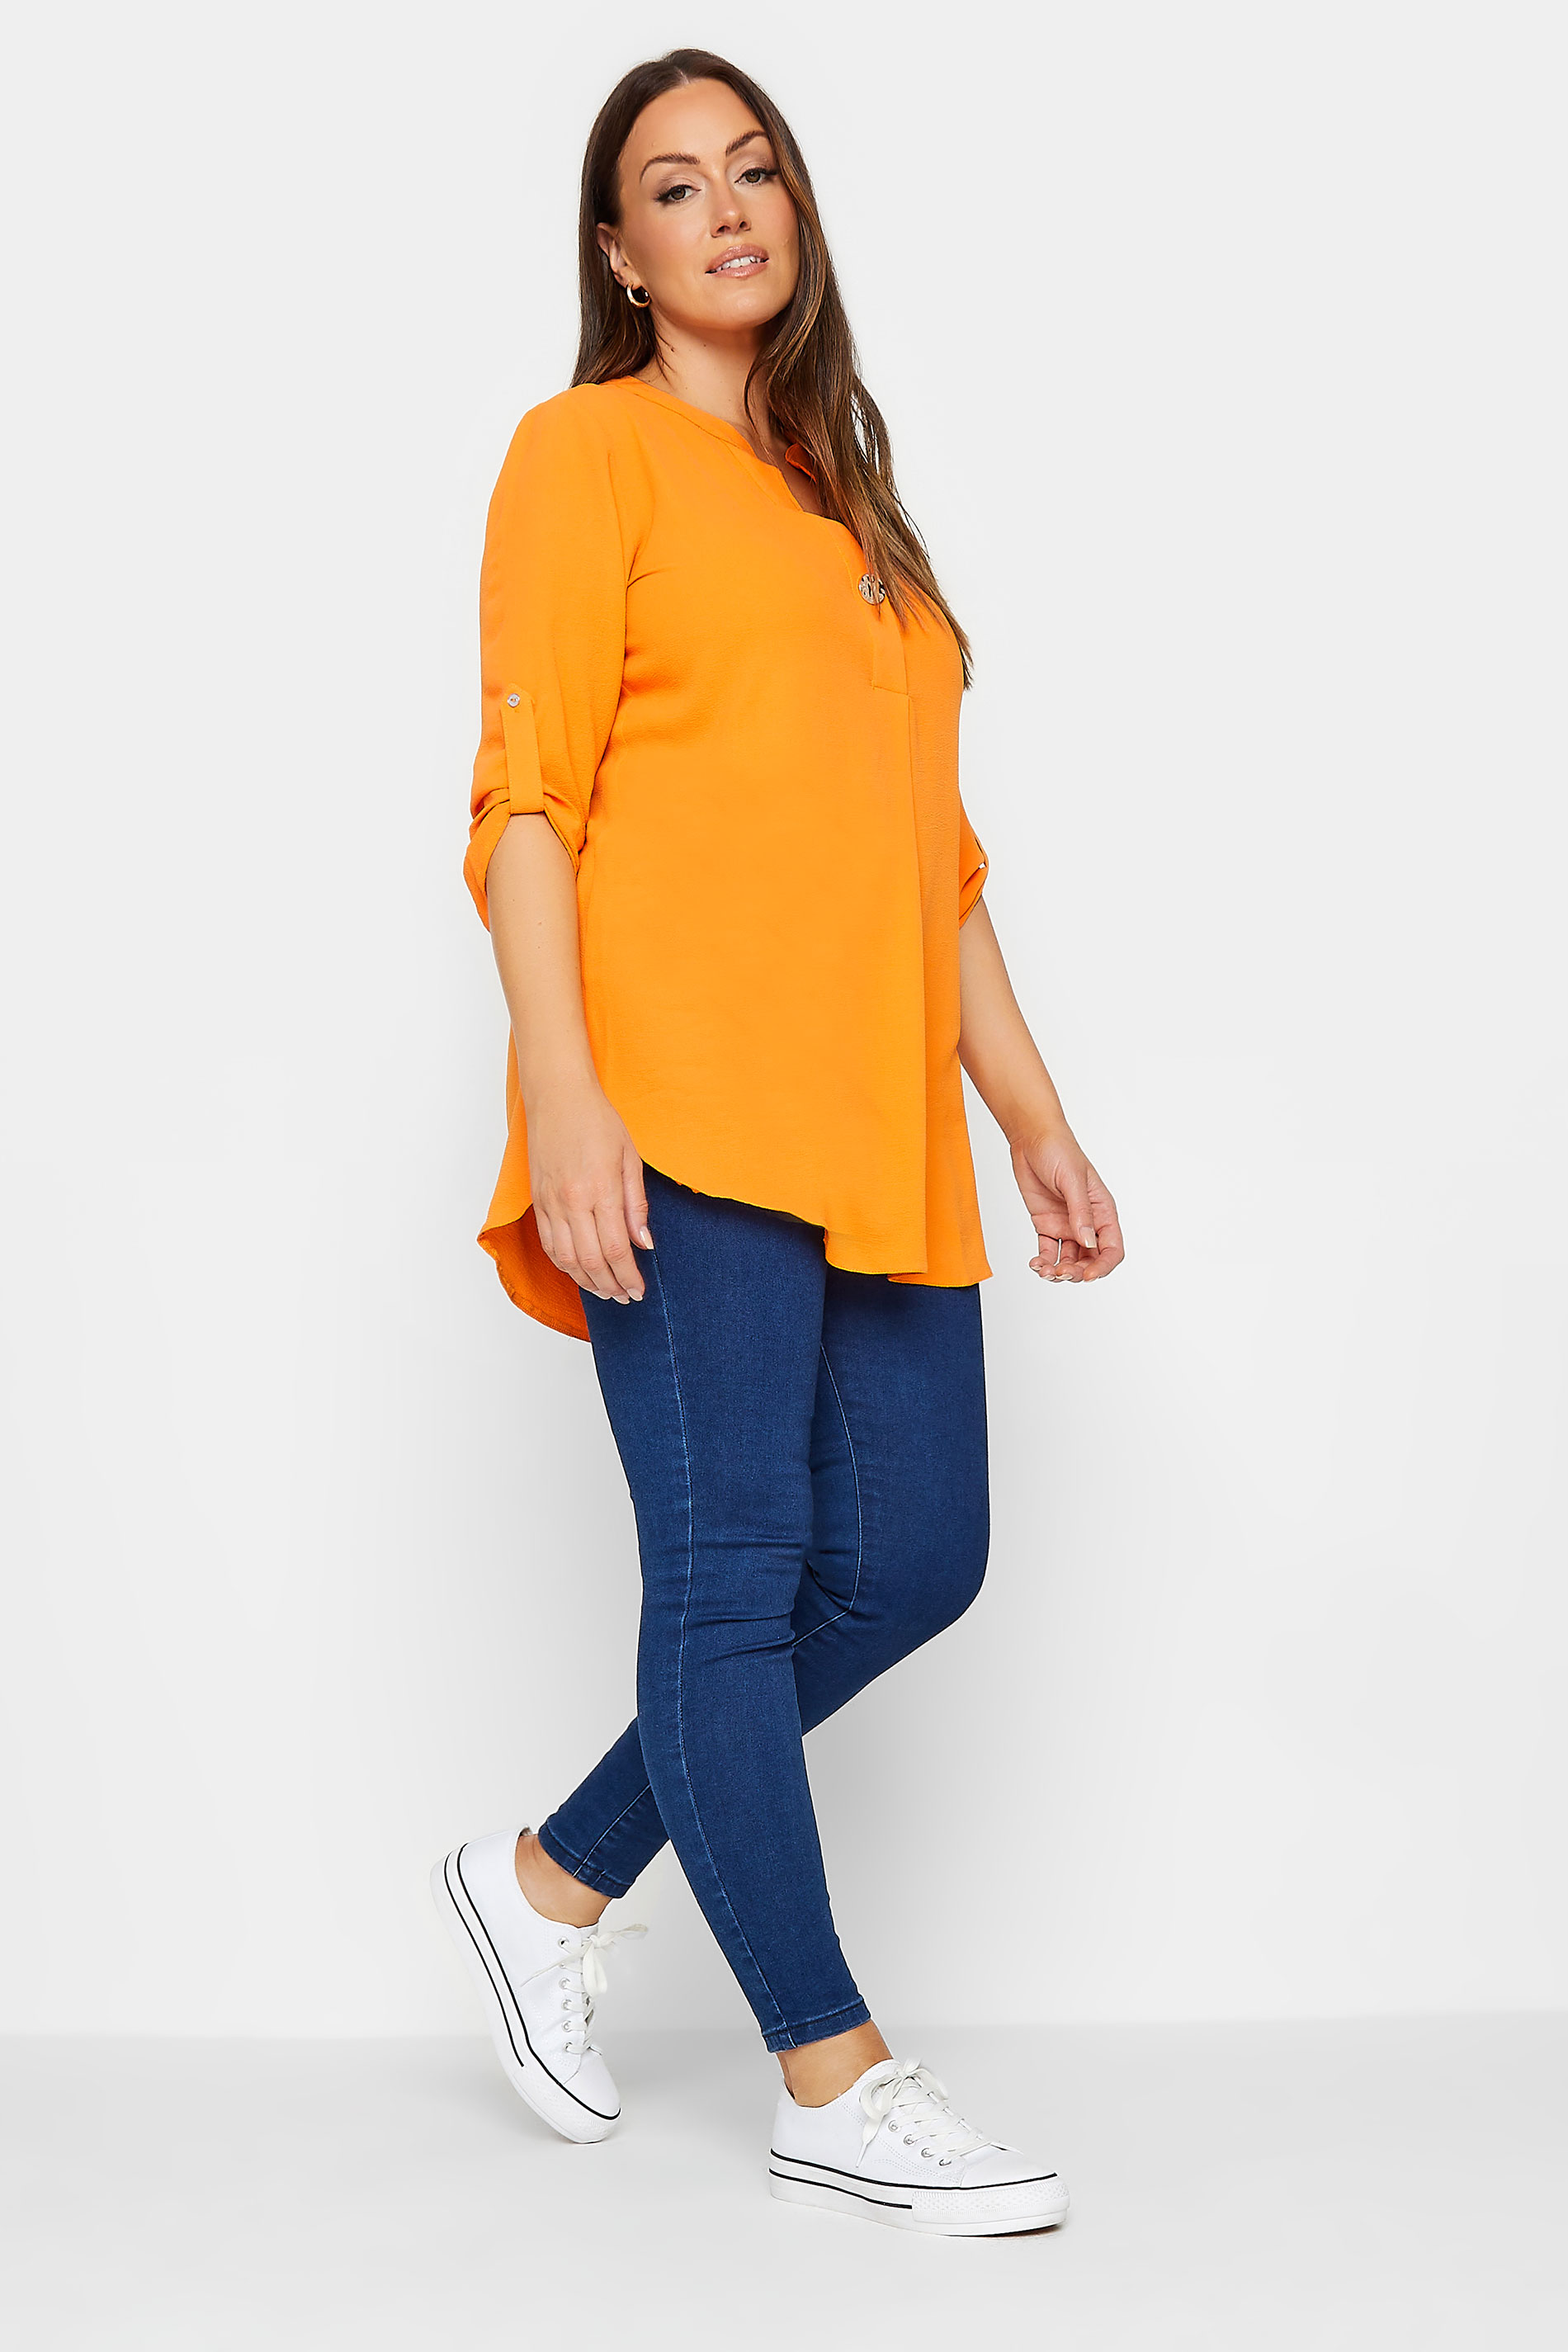 M&Co Orange Statement Button Tab Sleeve Shirt | M&Co 3